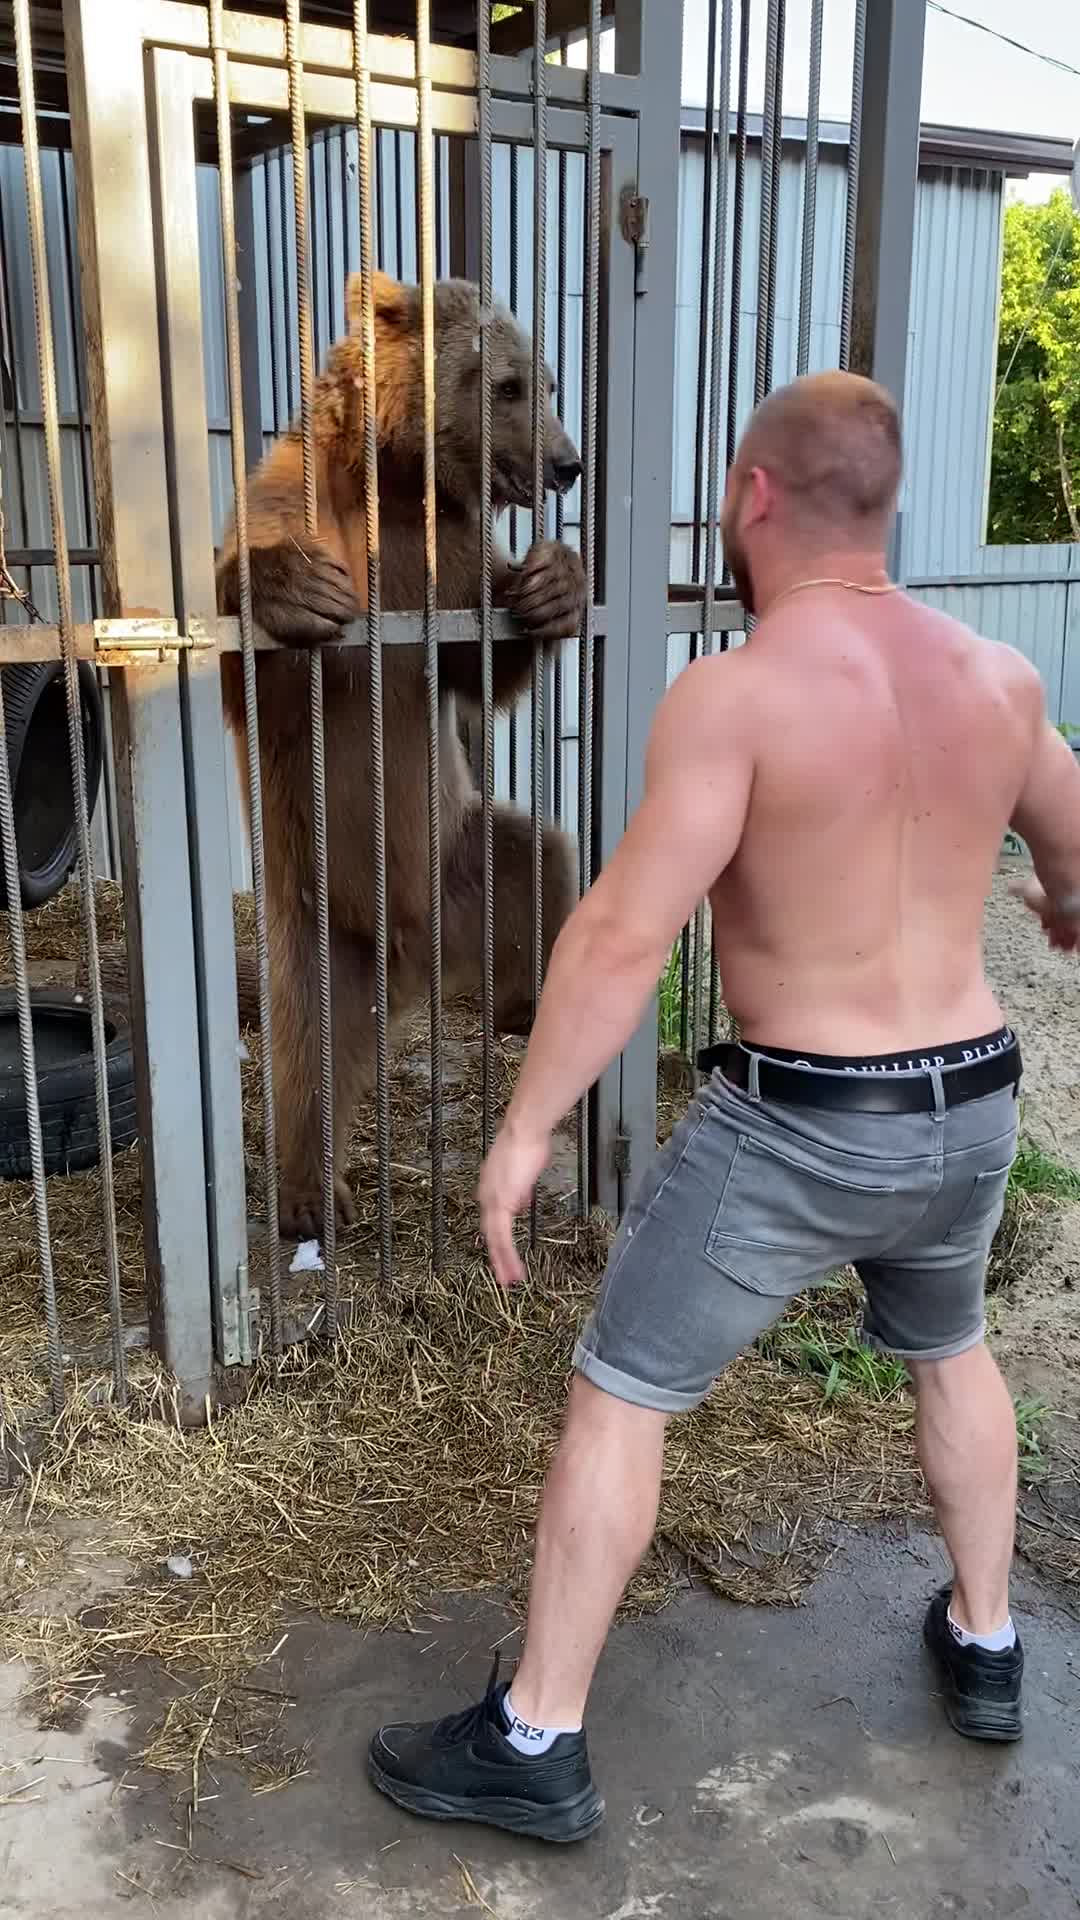 Bear Dances With His Human Friend